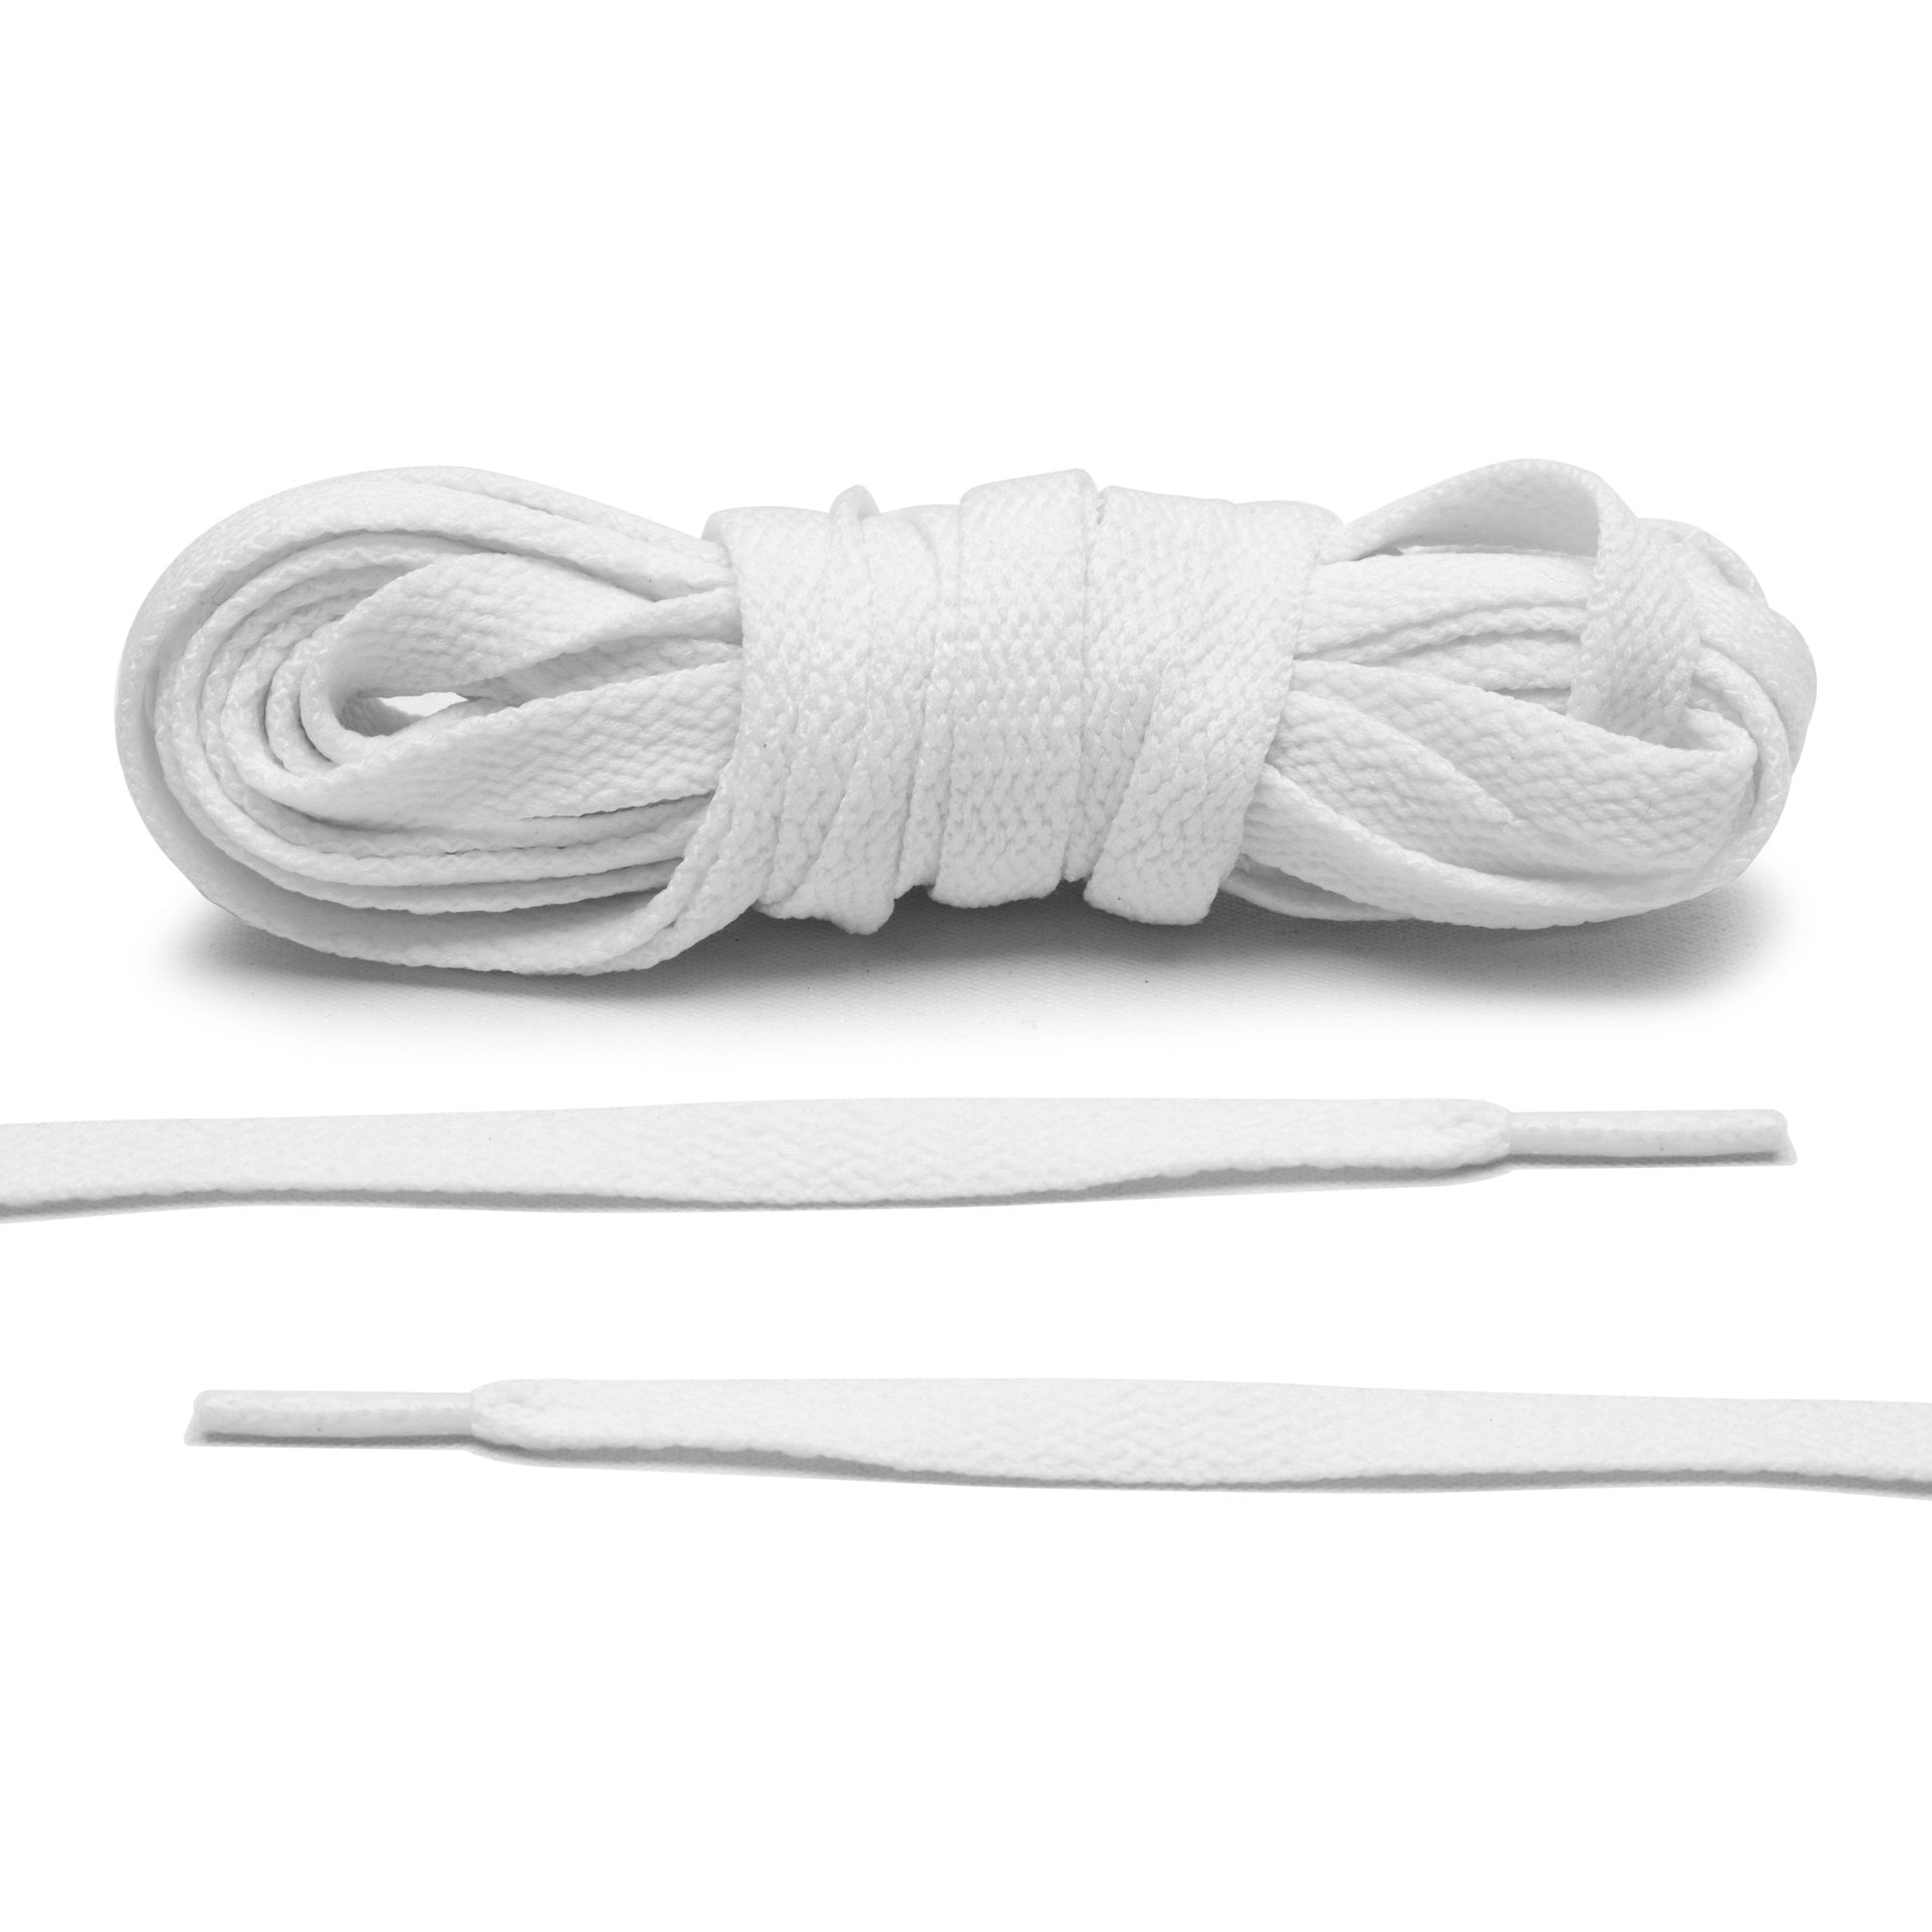 White Jordan 1 Replacement Shoelaces - Angelus Direct